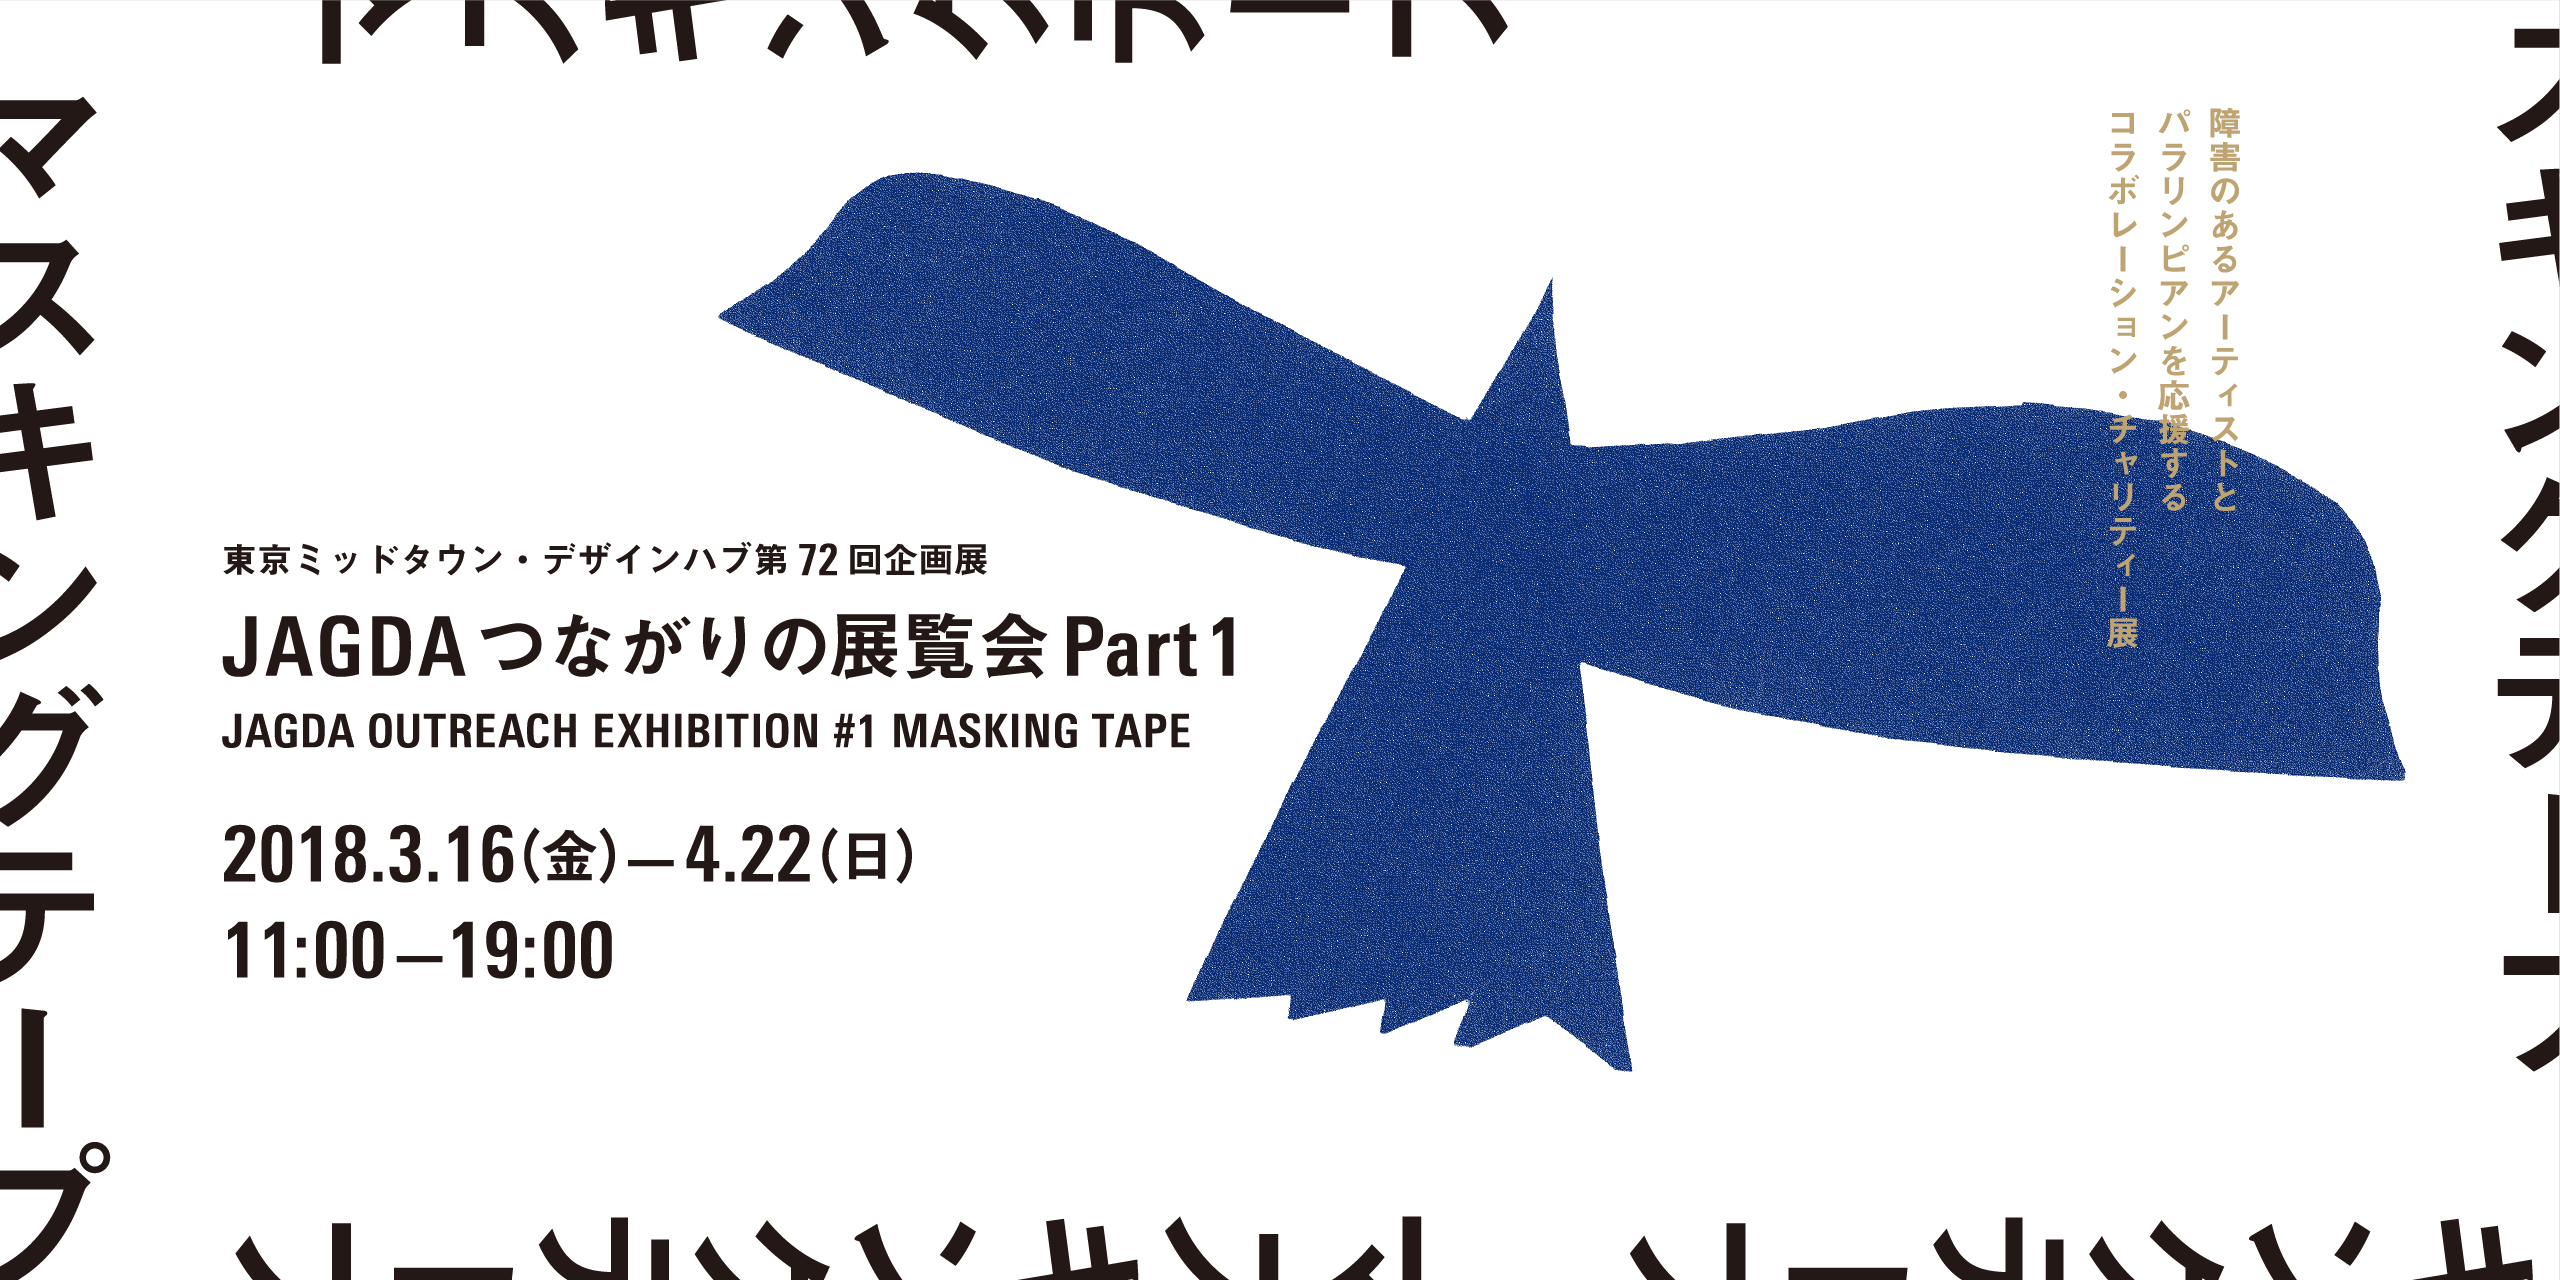 JAGDAつながりの展覧会 Part 1 マスキングテープ | Tokyo Midtown 